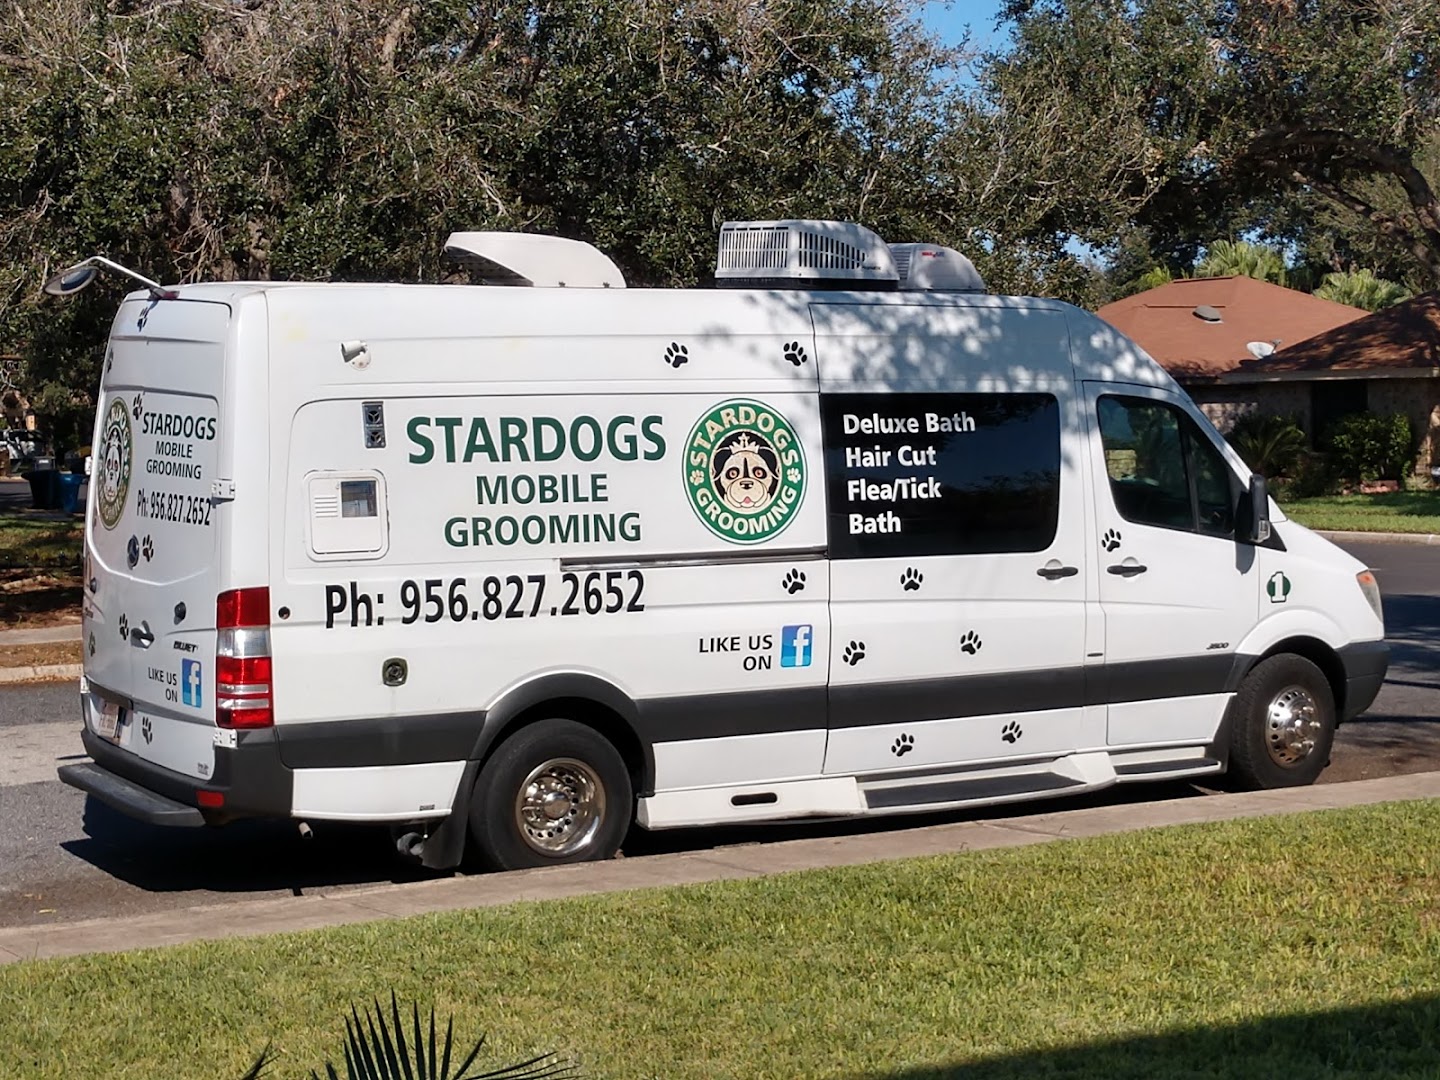 Stardogs mobile grooming